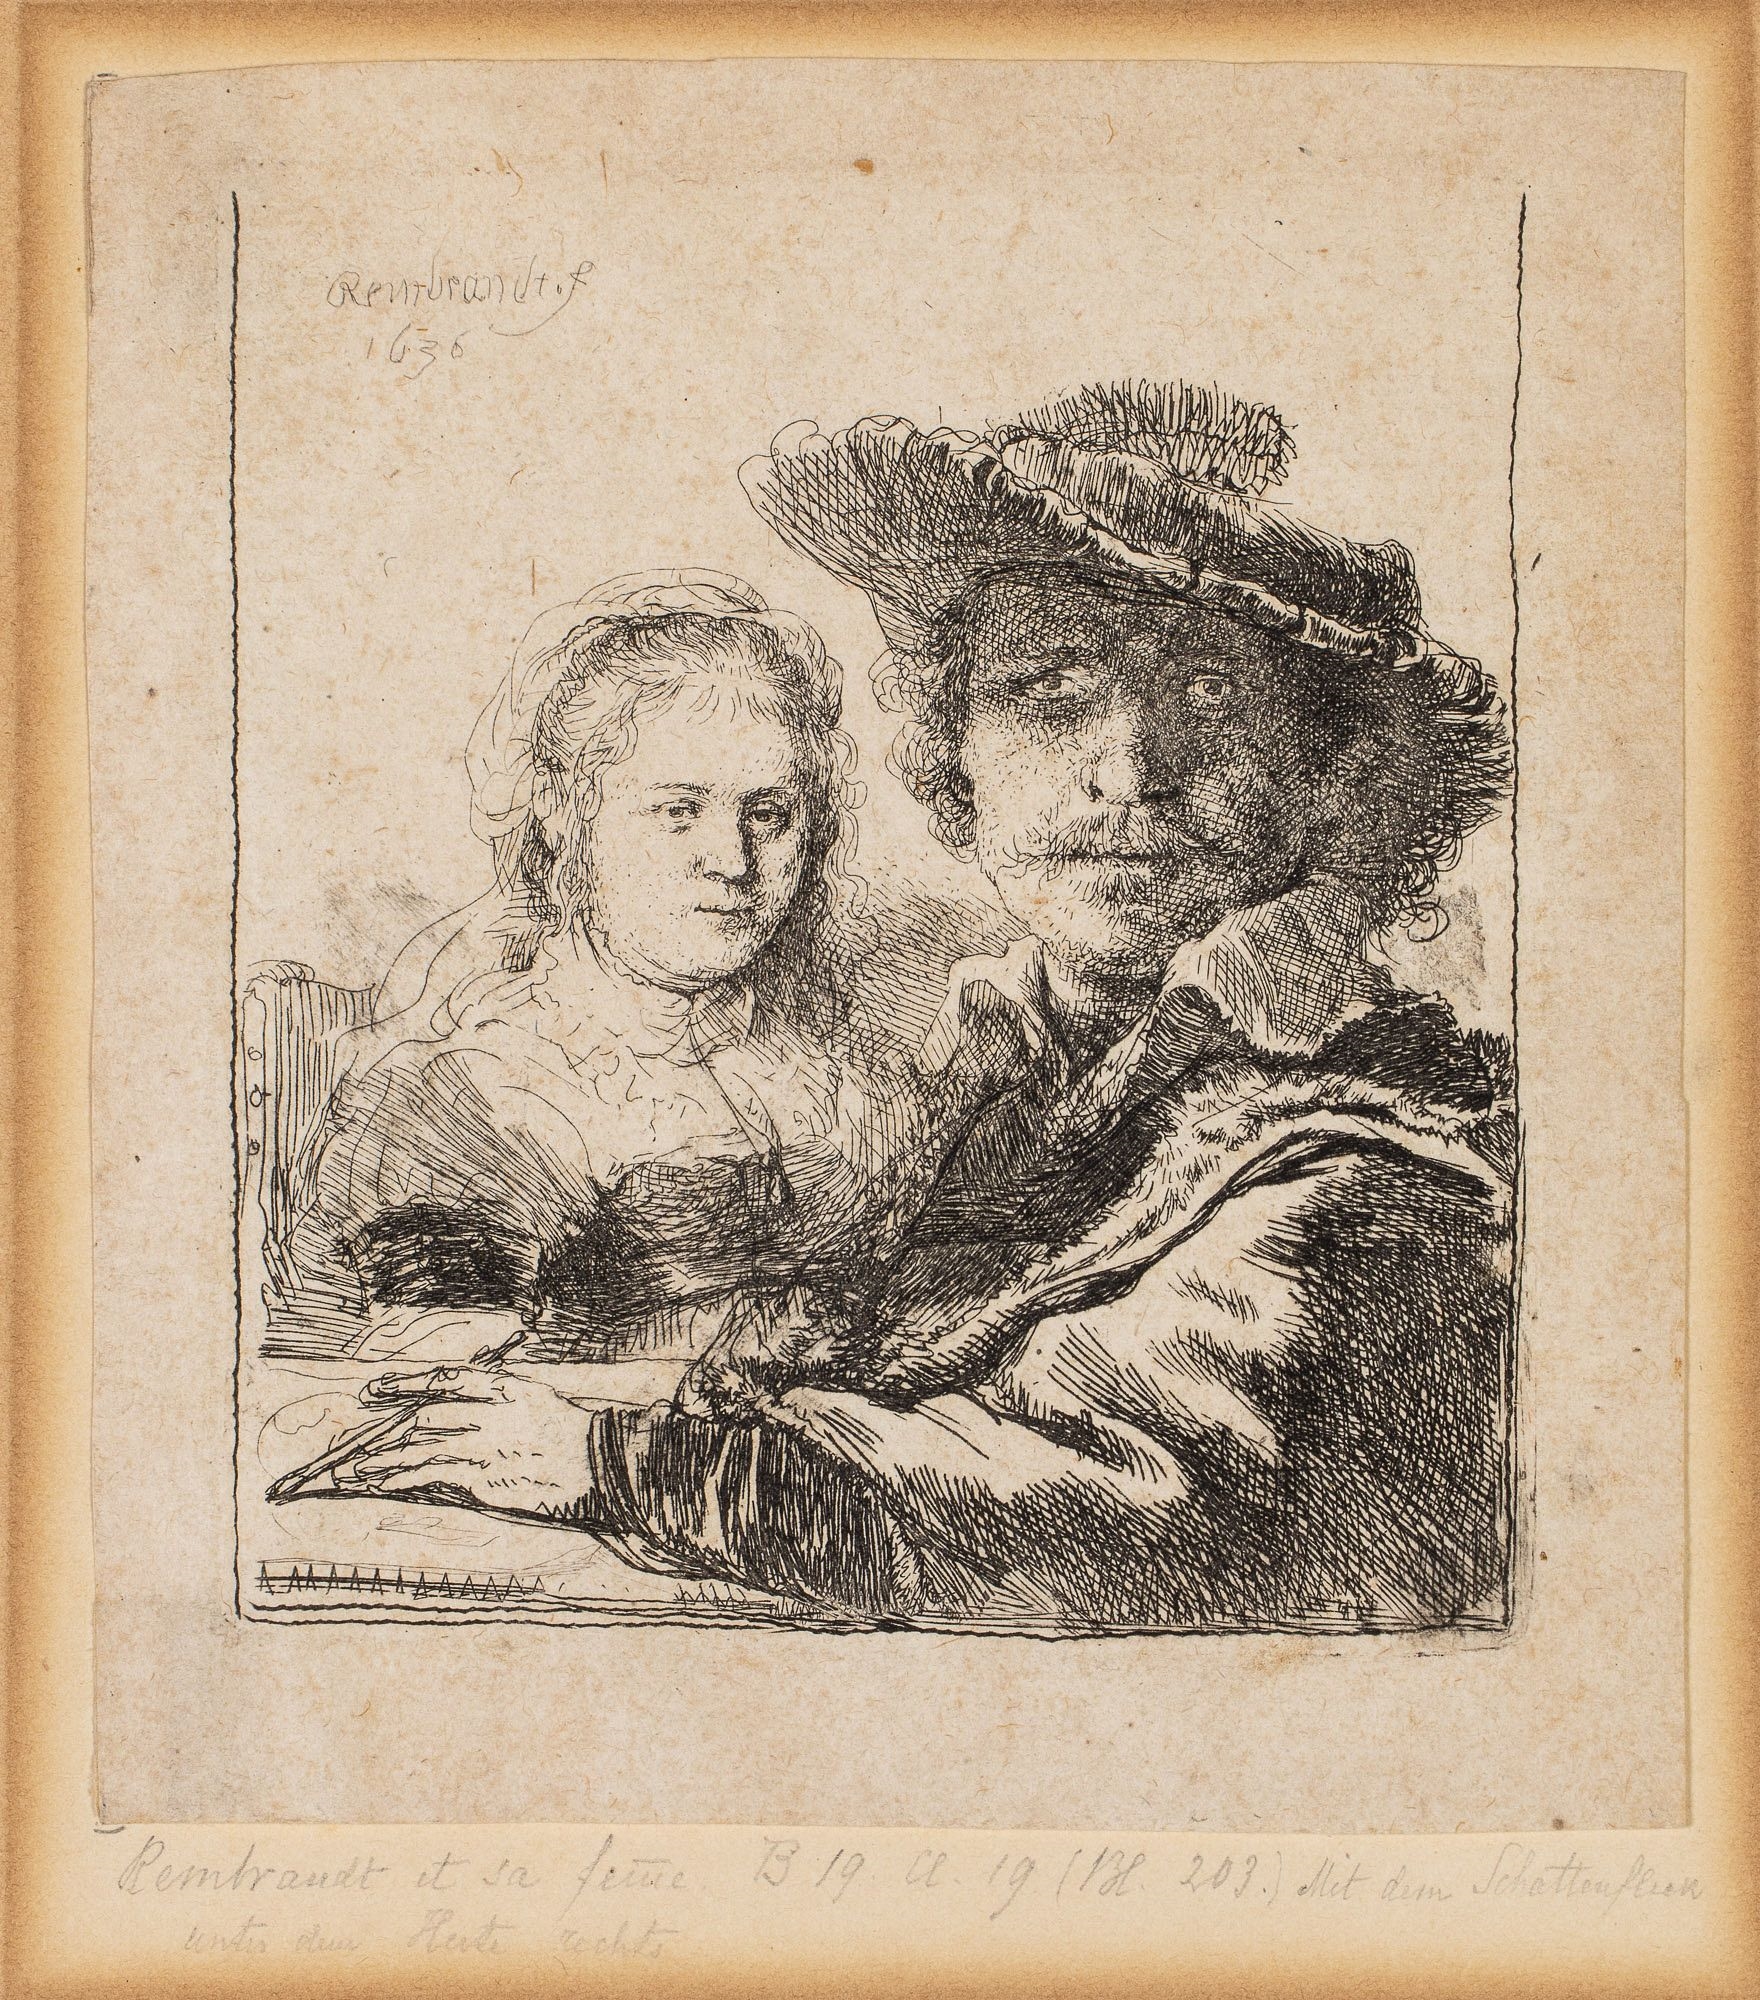 Self-Portrait with Saskia by Rembrandt van Rijn, dated 1636